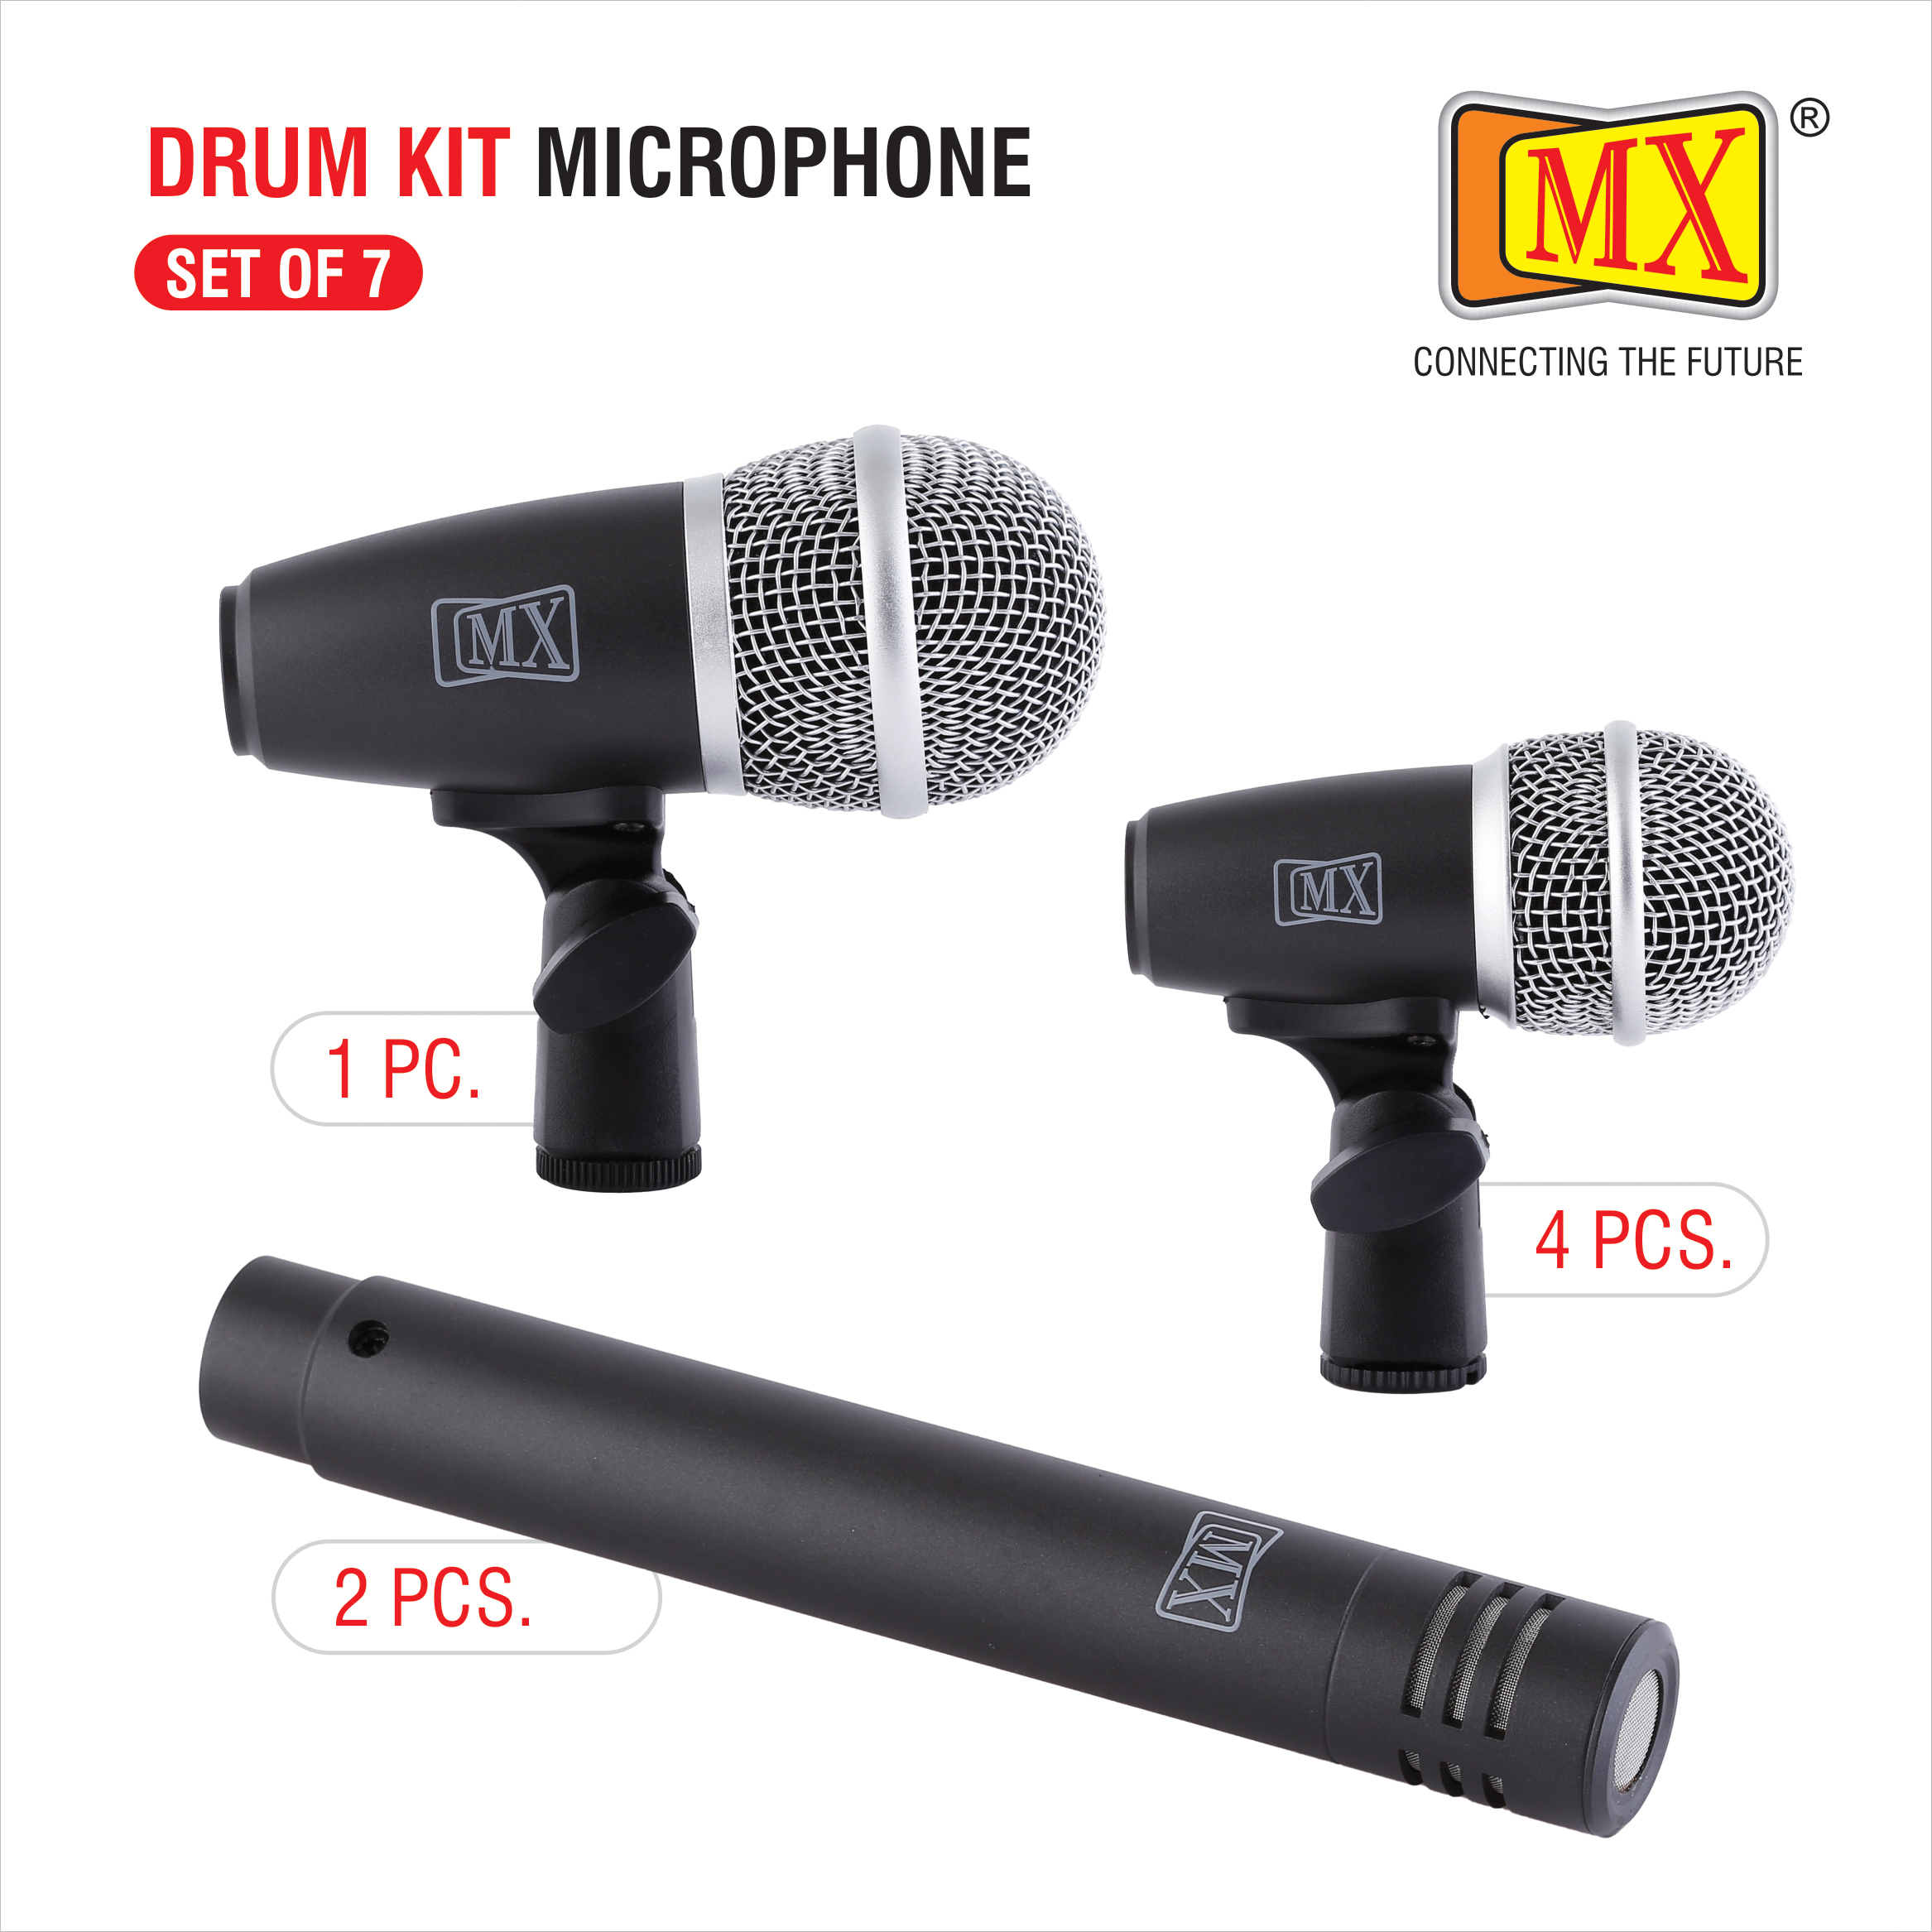 Drumkit set microphone BETADMK7 Drum Kit Microphone instrument kit